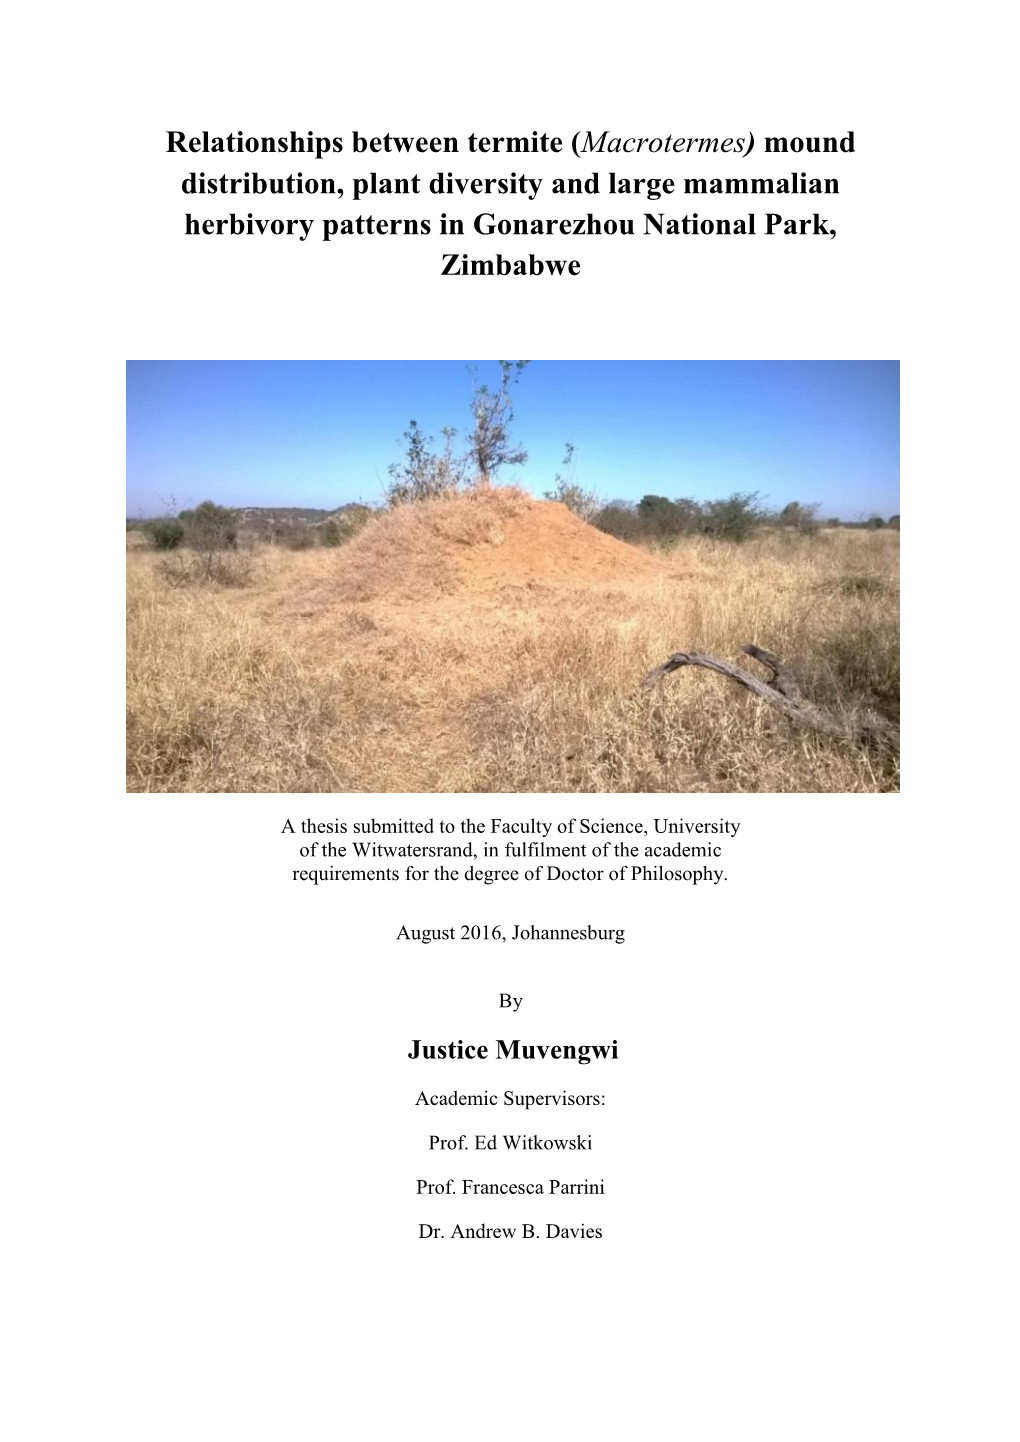 Relationships Between Termite (Macrotermes) Mound Distribution, Plant Diversity and Large Mammalian Herbivory Patterns in Gonarezhou National Park, Zimbabwe